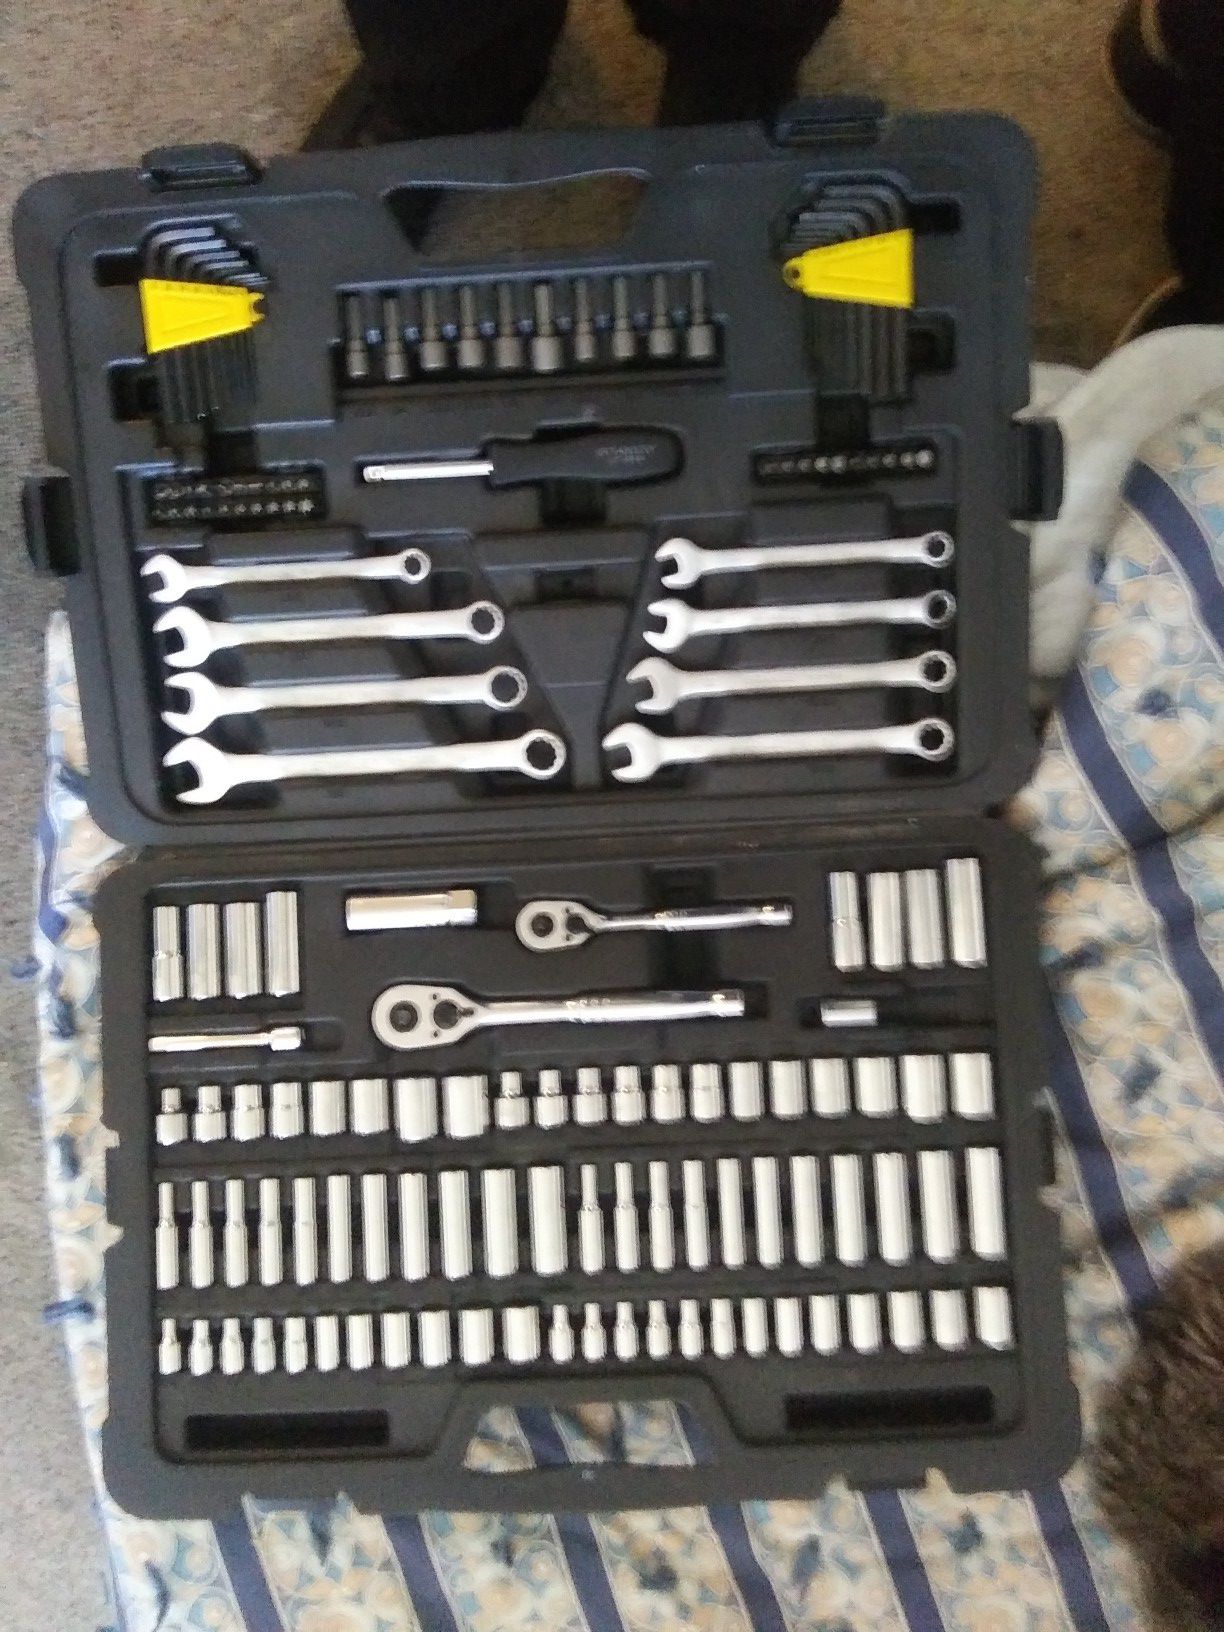 Stanley Mechanics Tool Set, 145 Pieces